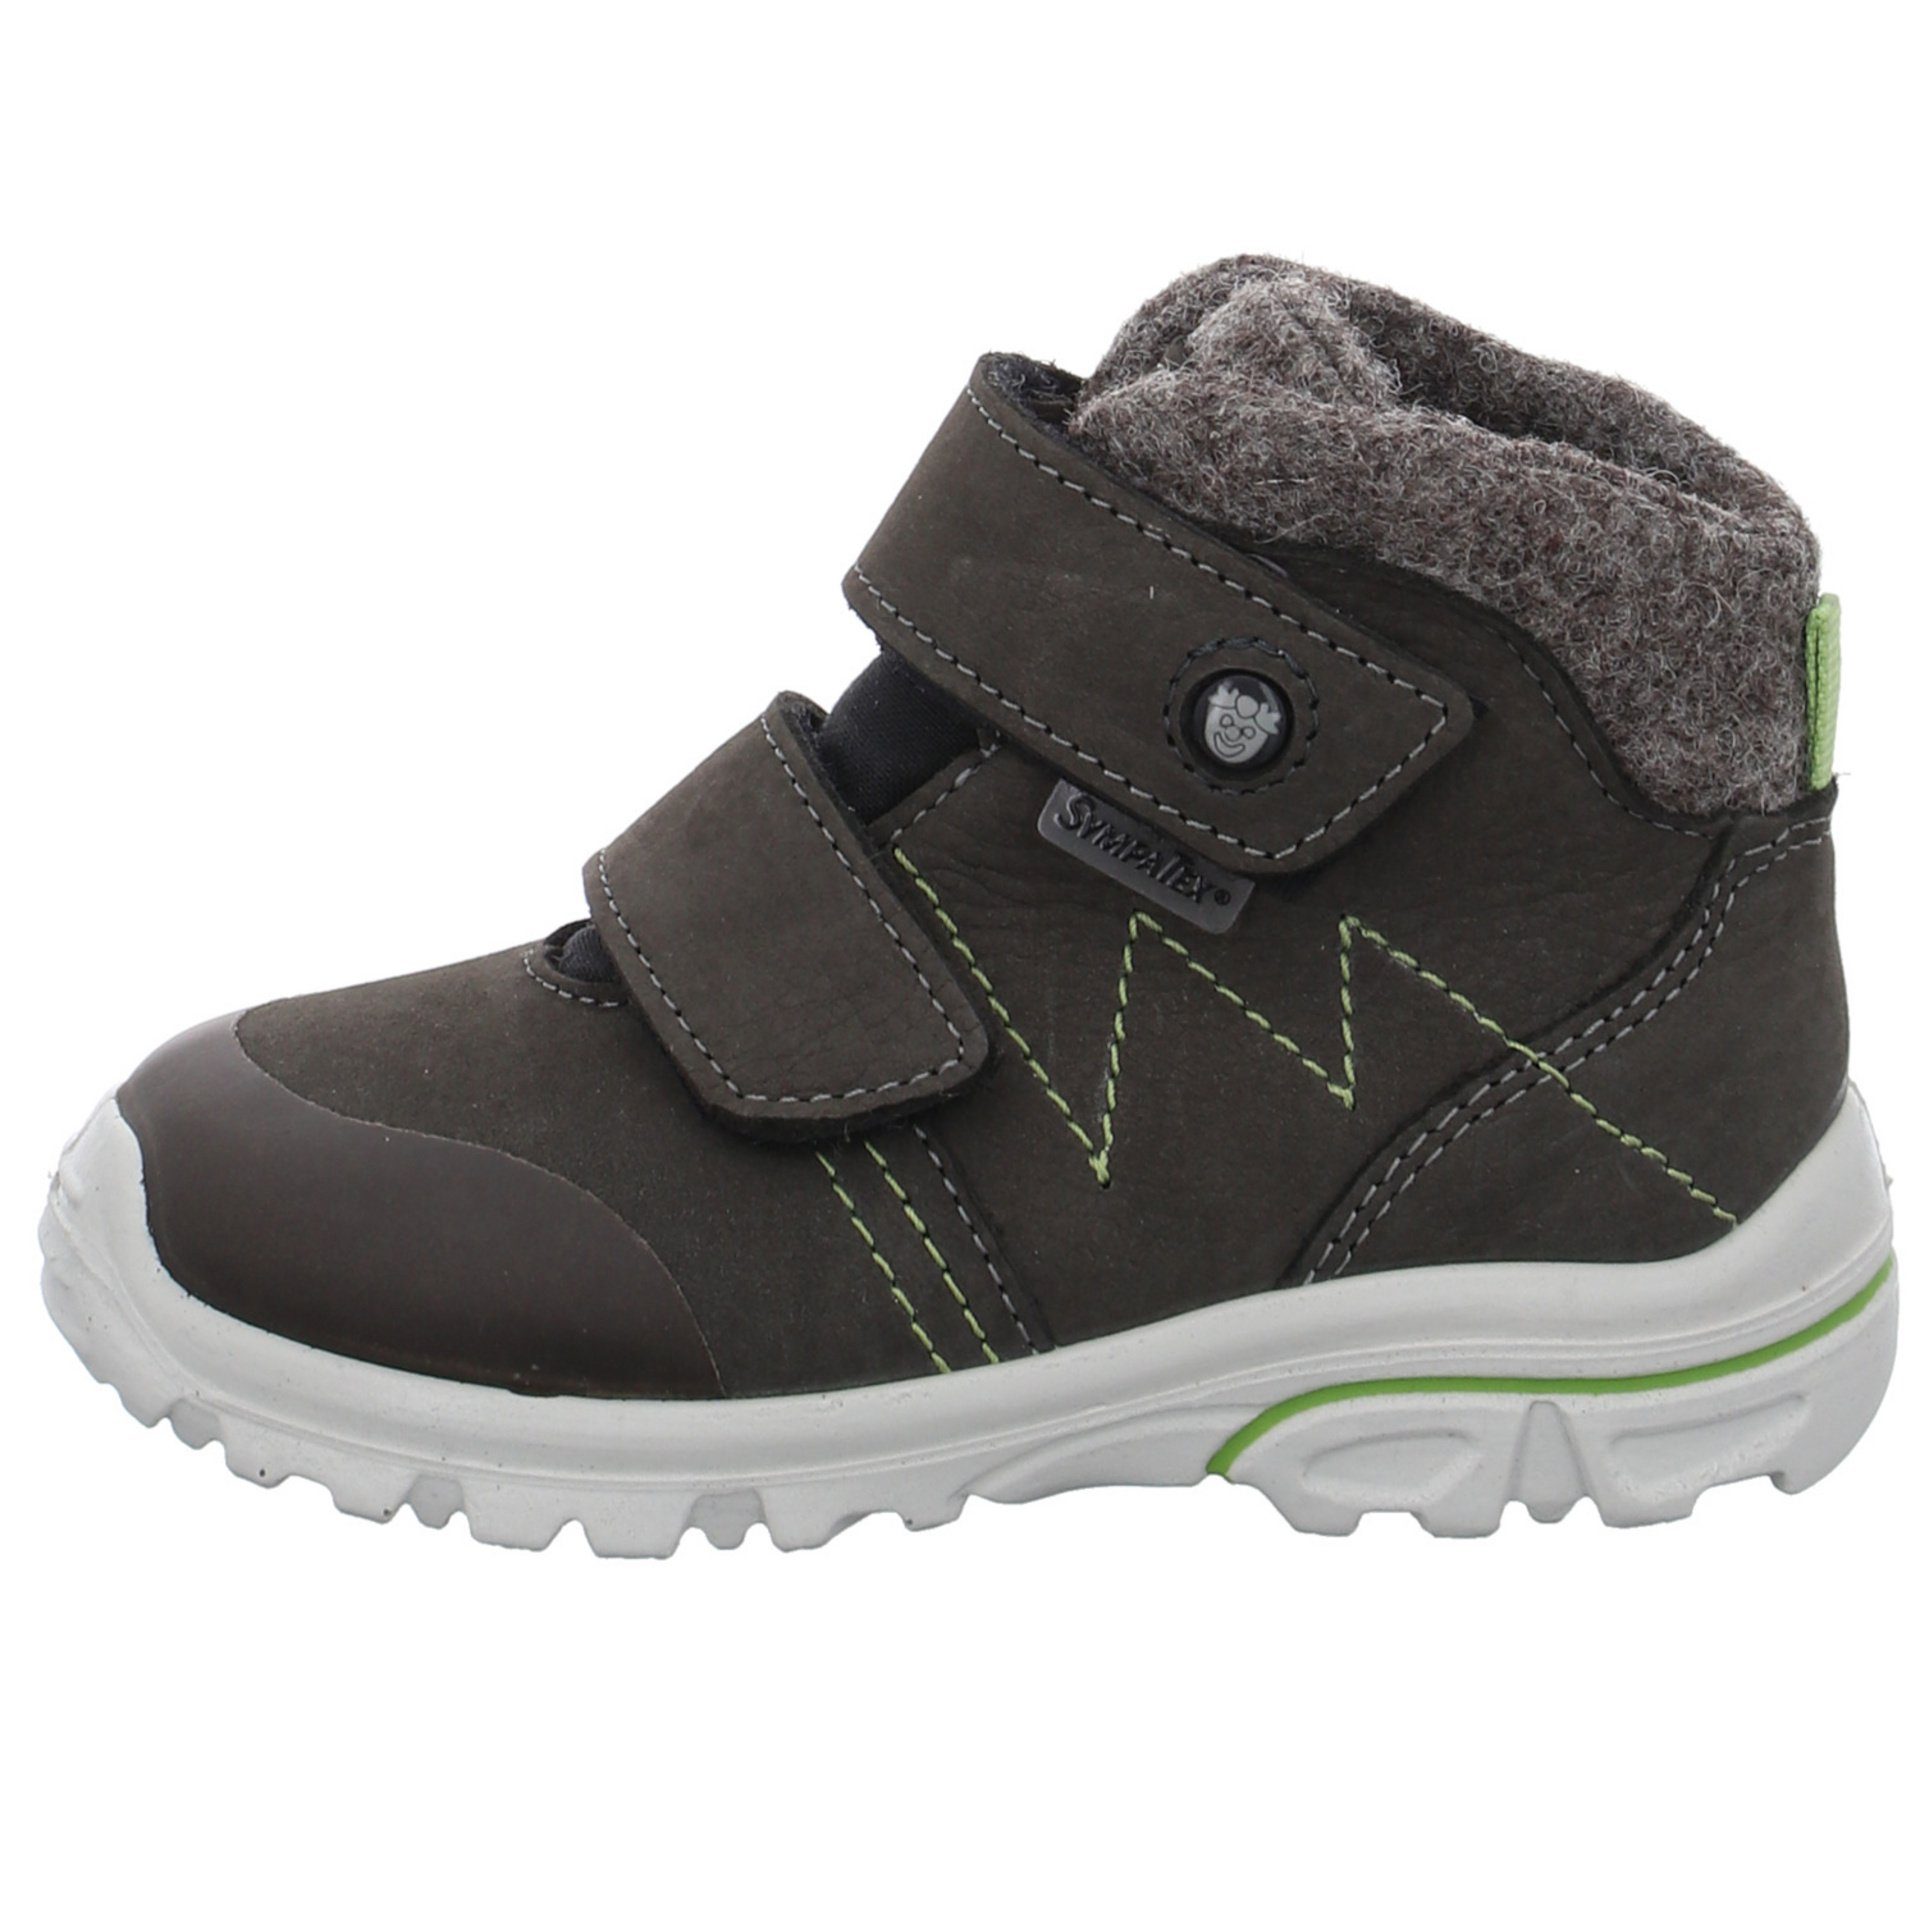 Lauflernschuhe Dario Pepino Ricosta Baby Leder-/Textilkombination Boots Krabbelschuhe timo Lauflernschuh